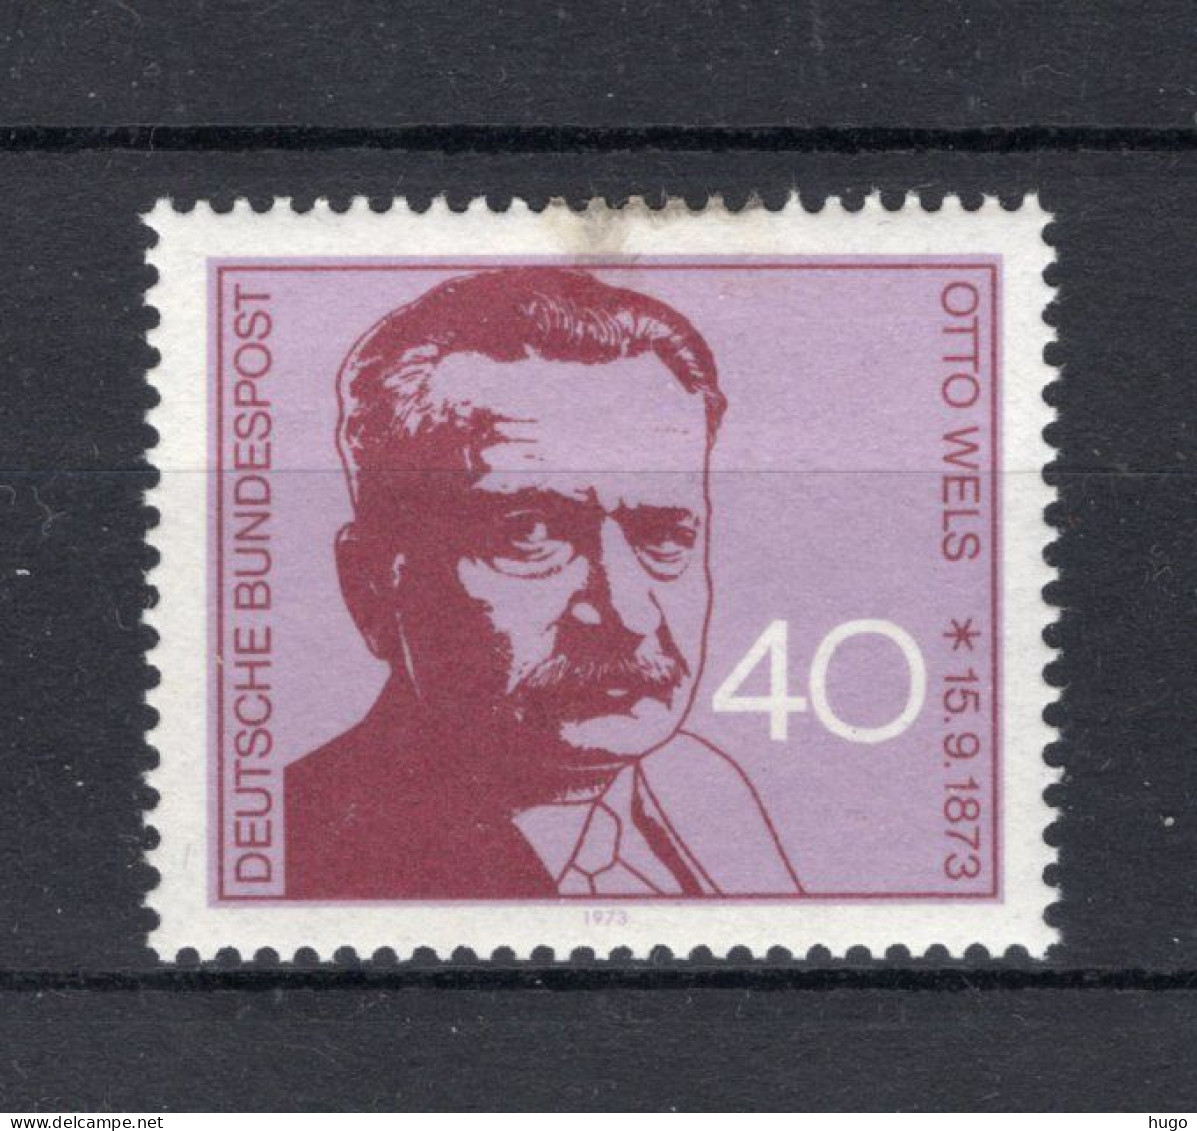 DUITSLAND Yt. 630 MH 1973 - Unused Stamps